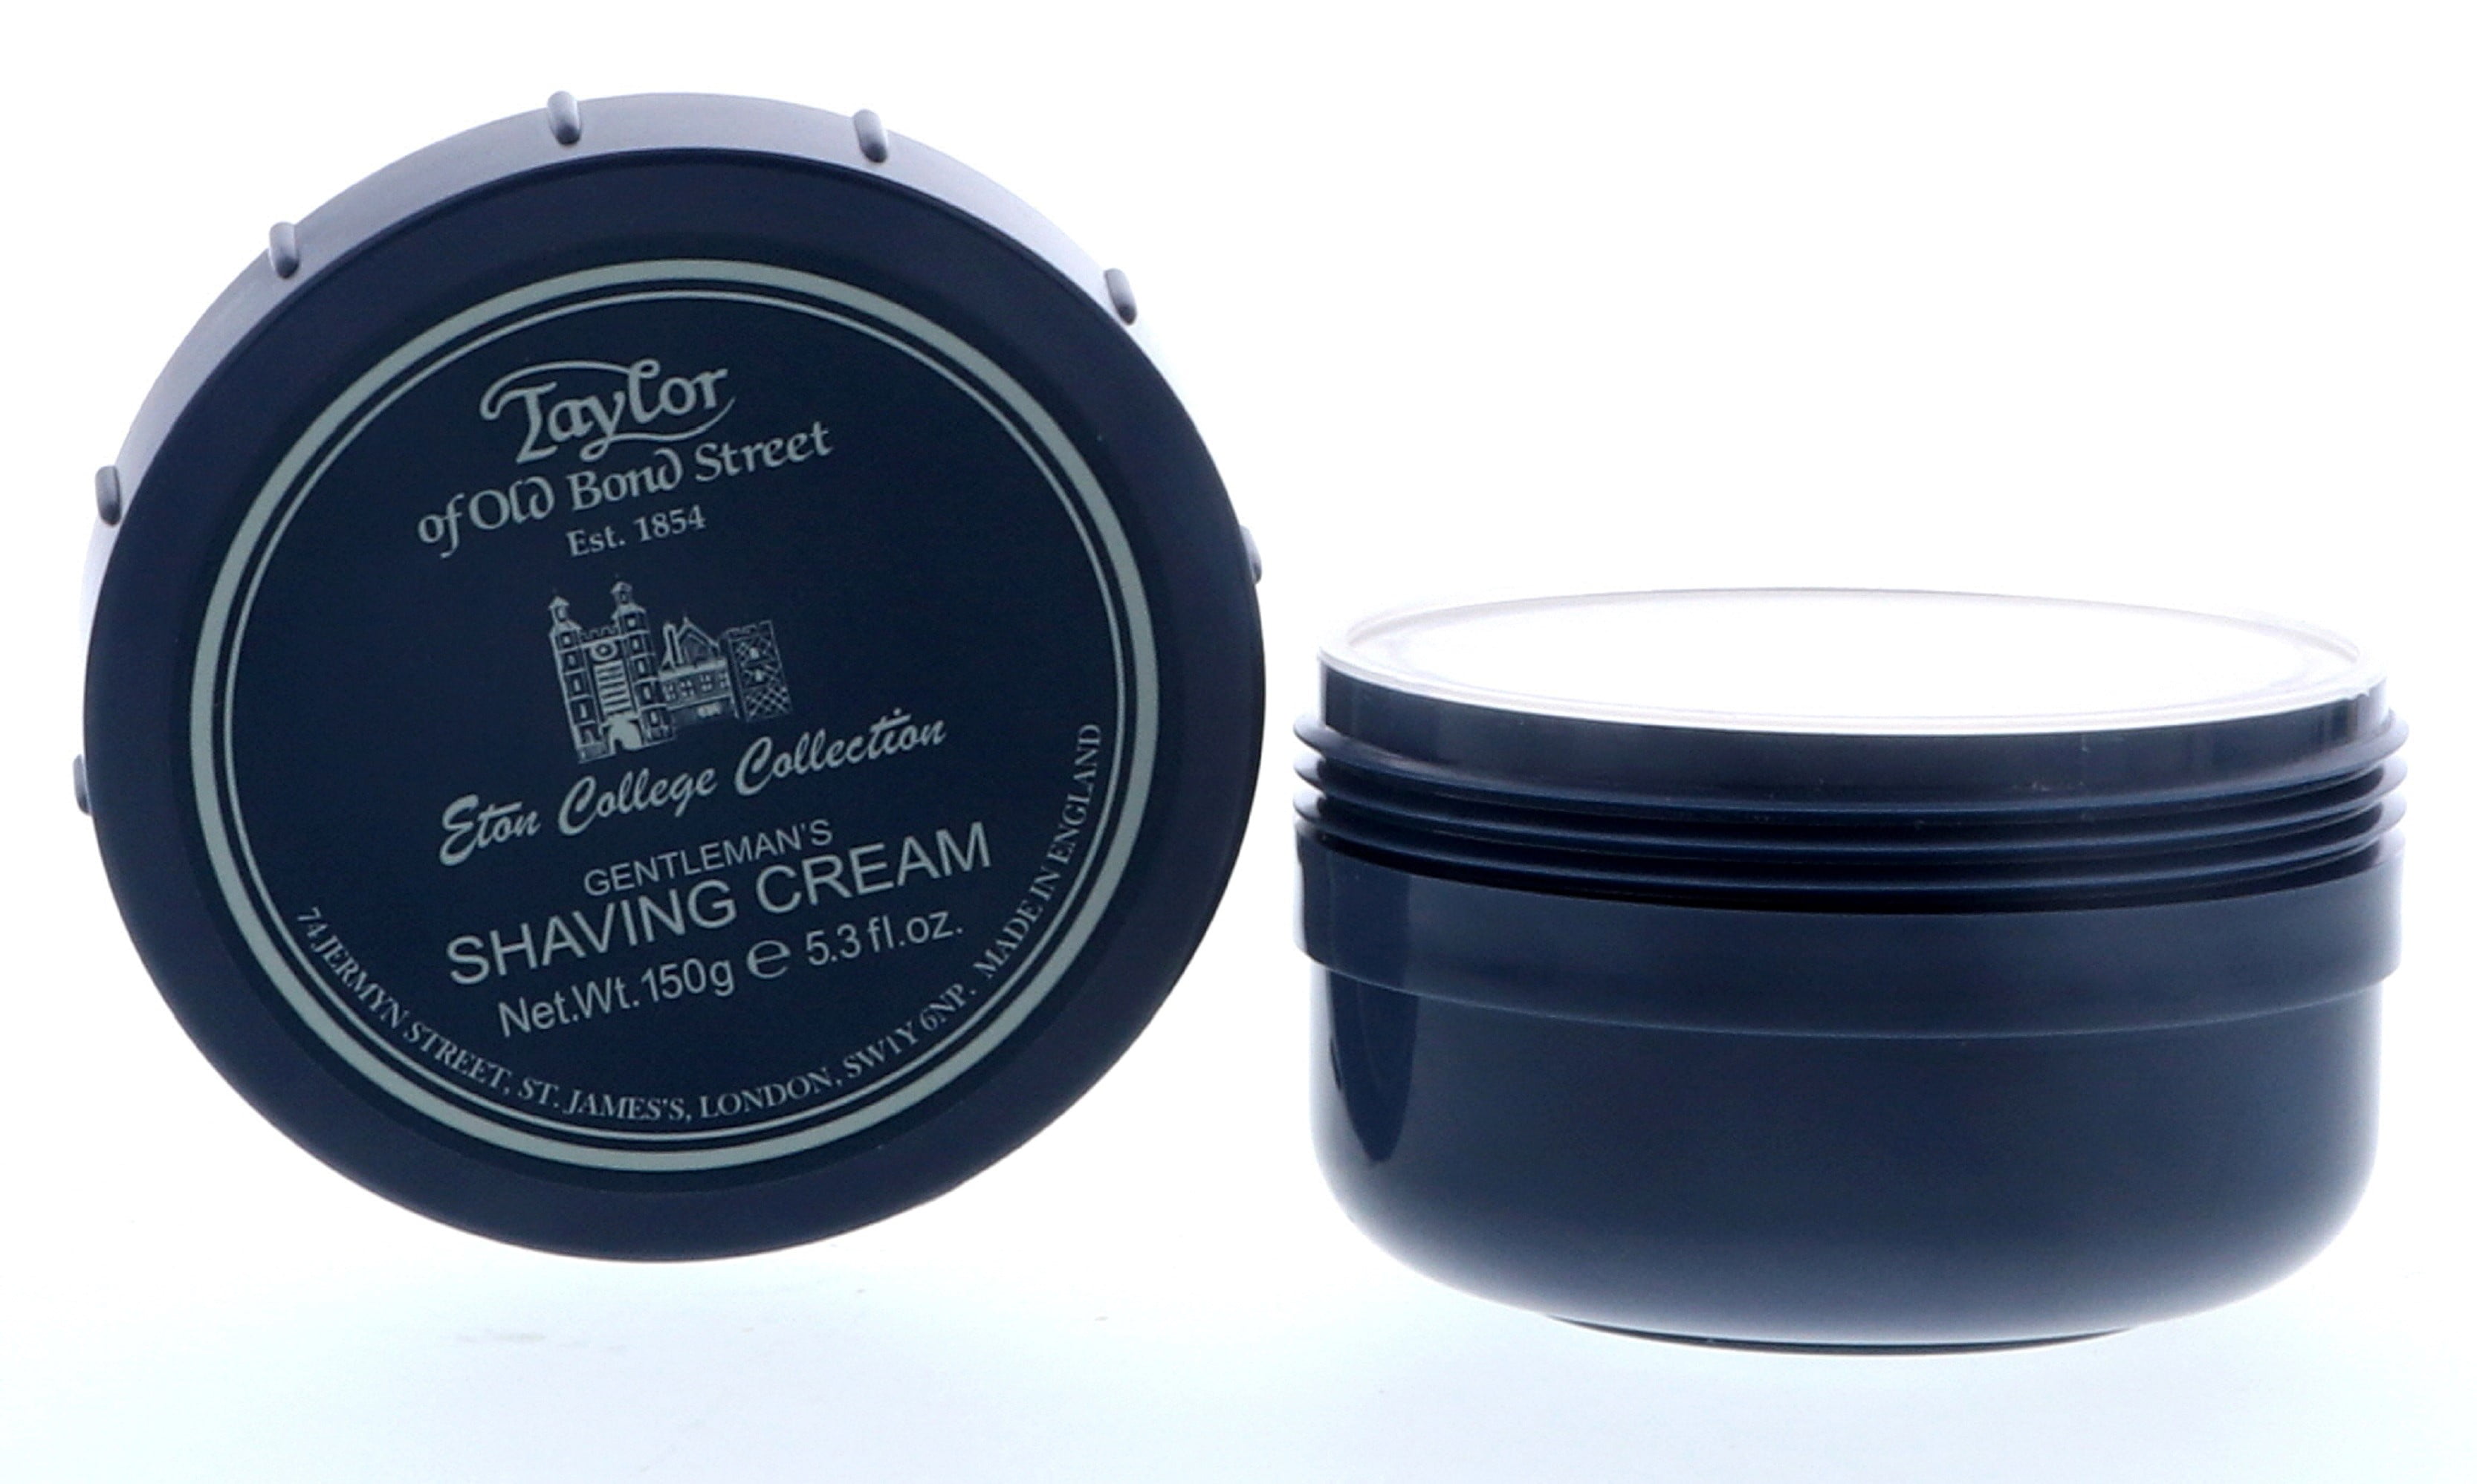 Taylor of Old Bond Street Eton College Collection Gentleman's Shaving Cream  5.3 oz 2 Pack